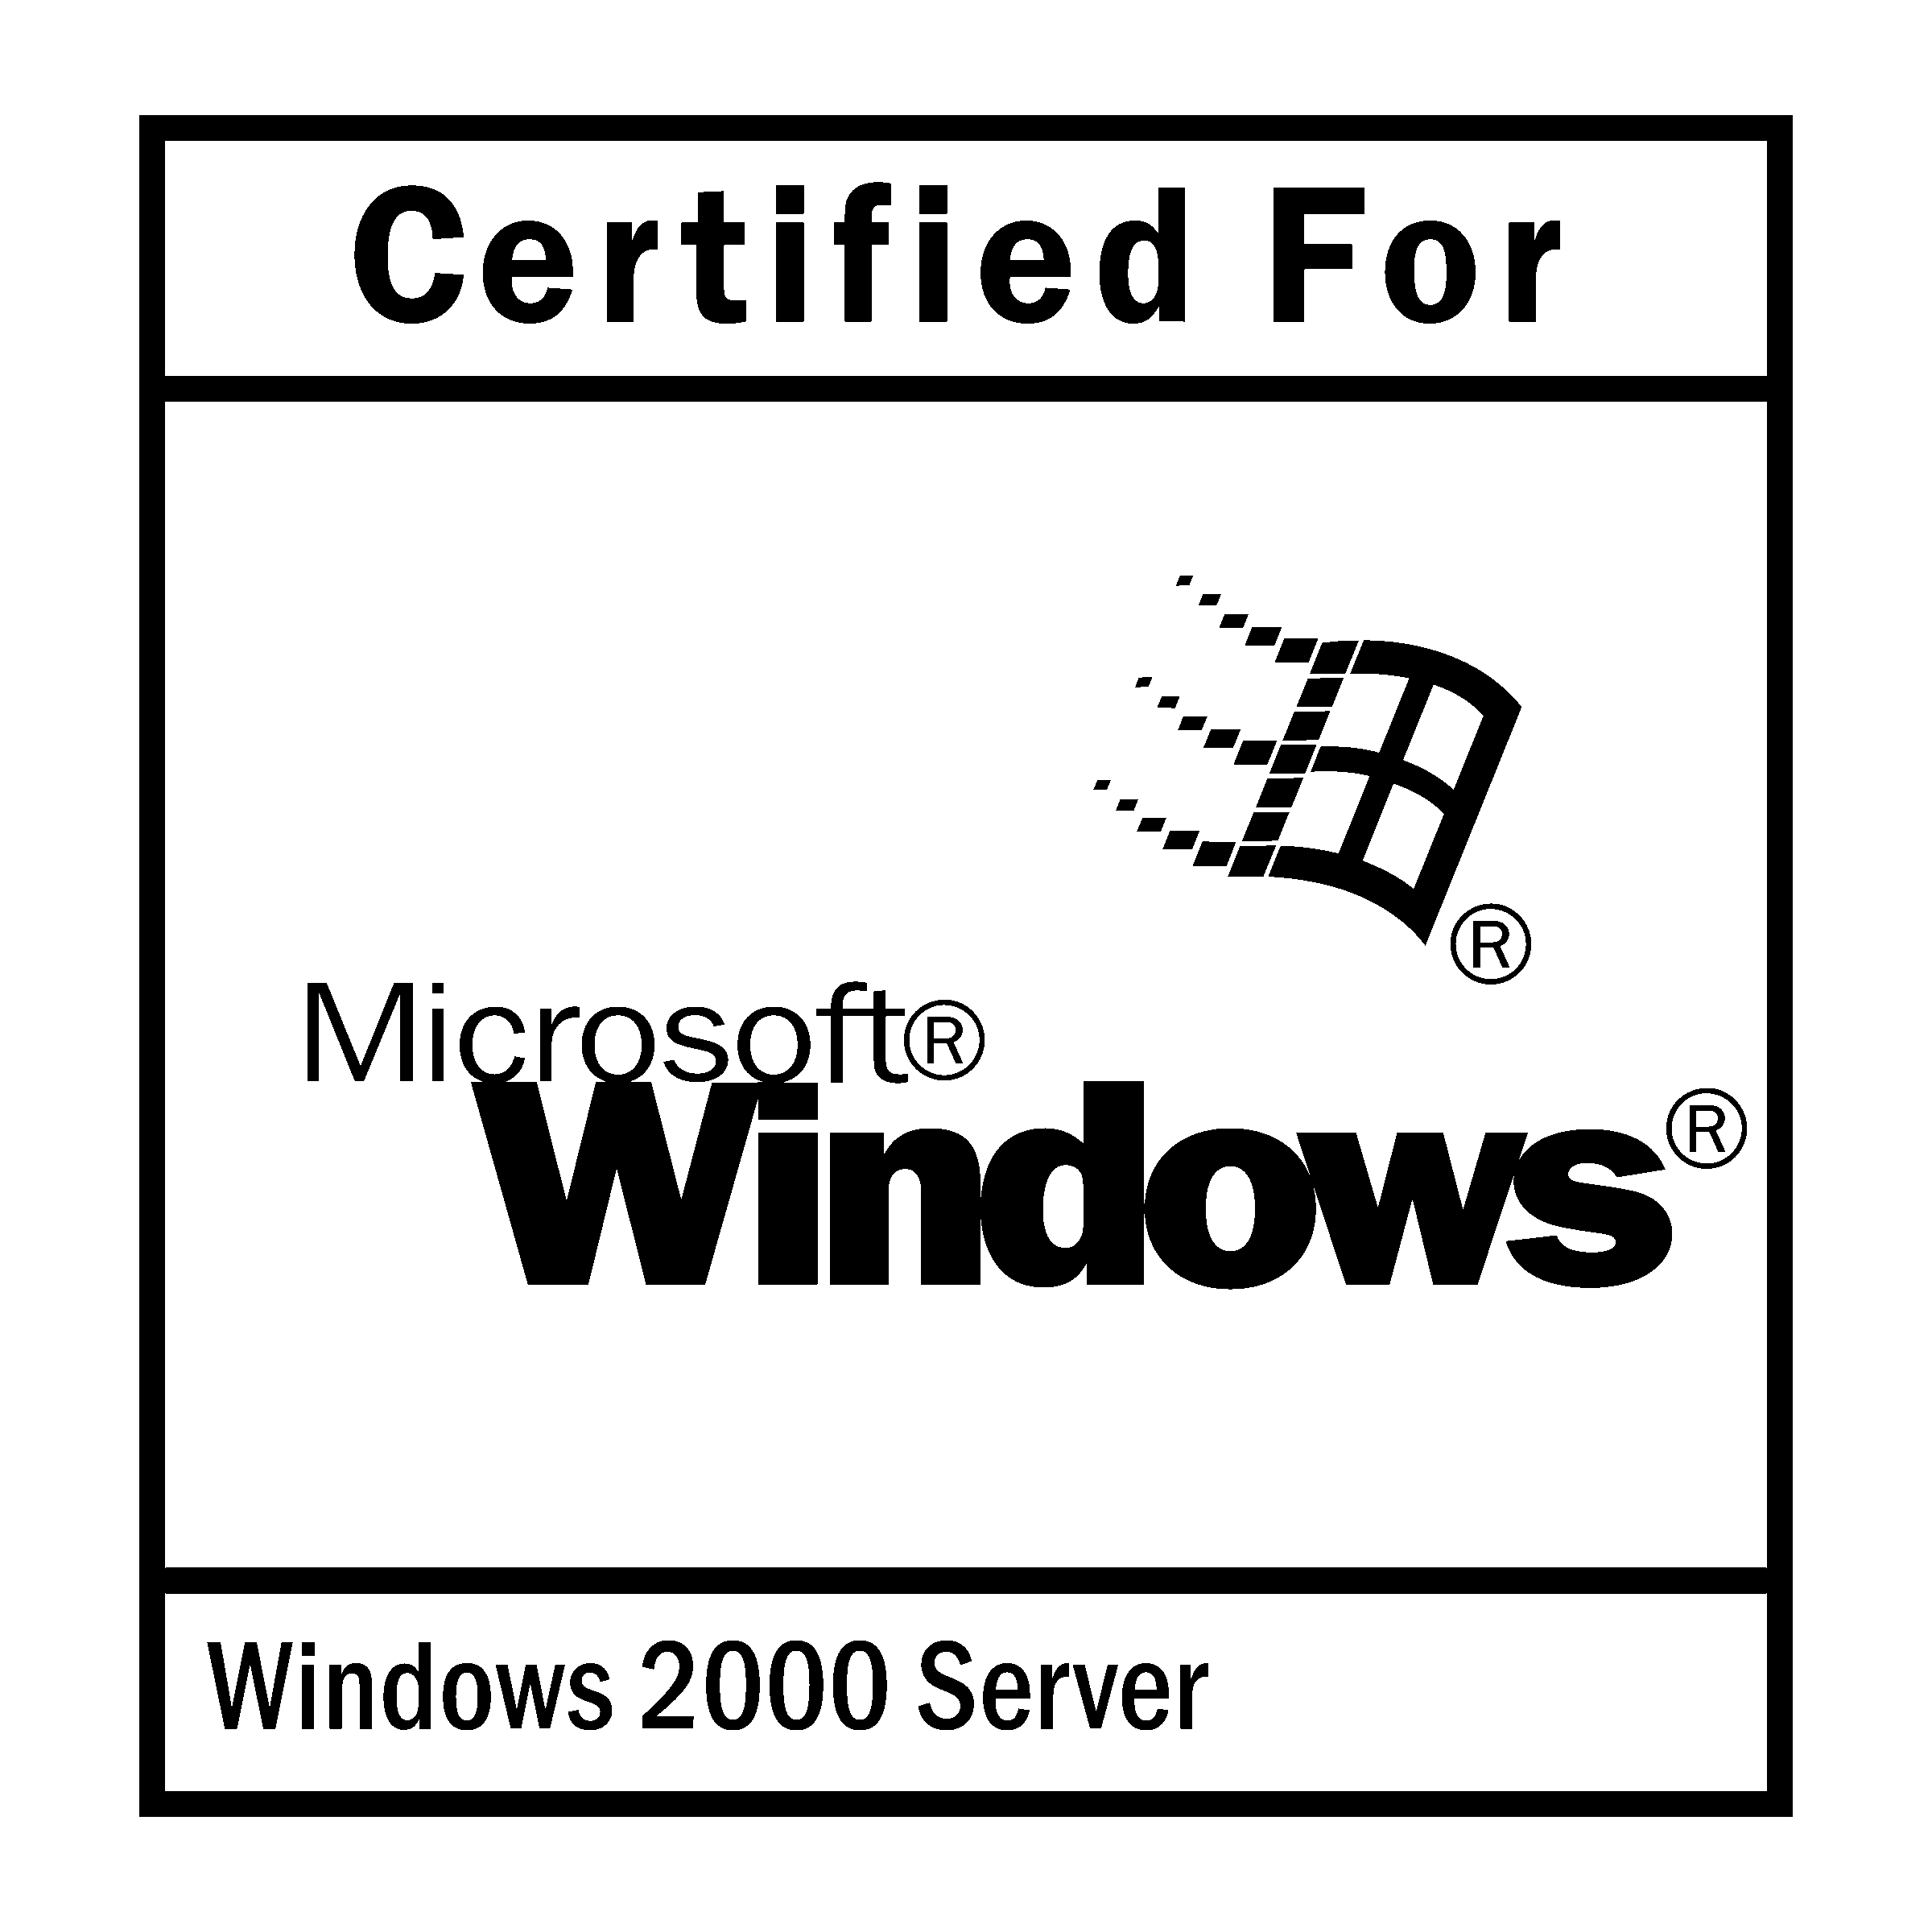 Microsoft Windows 2000 Logo - Microsoft Windows 2000 Server Logo PNG Transparent & SVG Vector